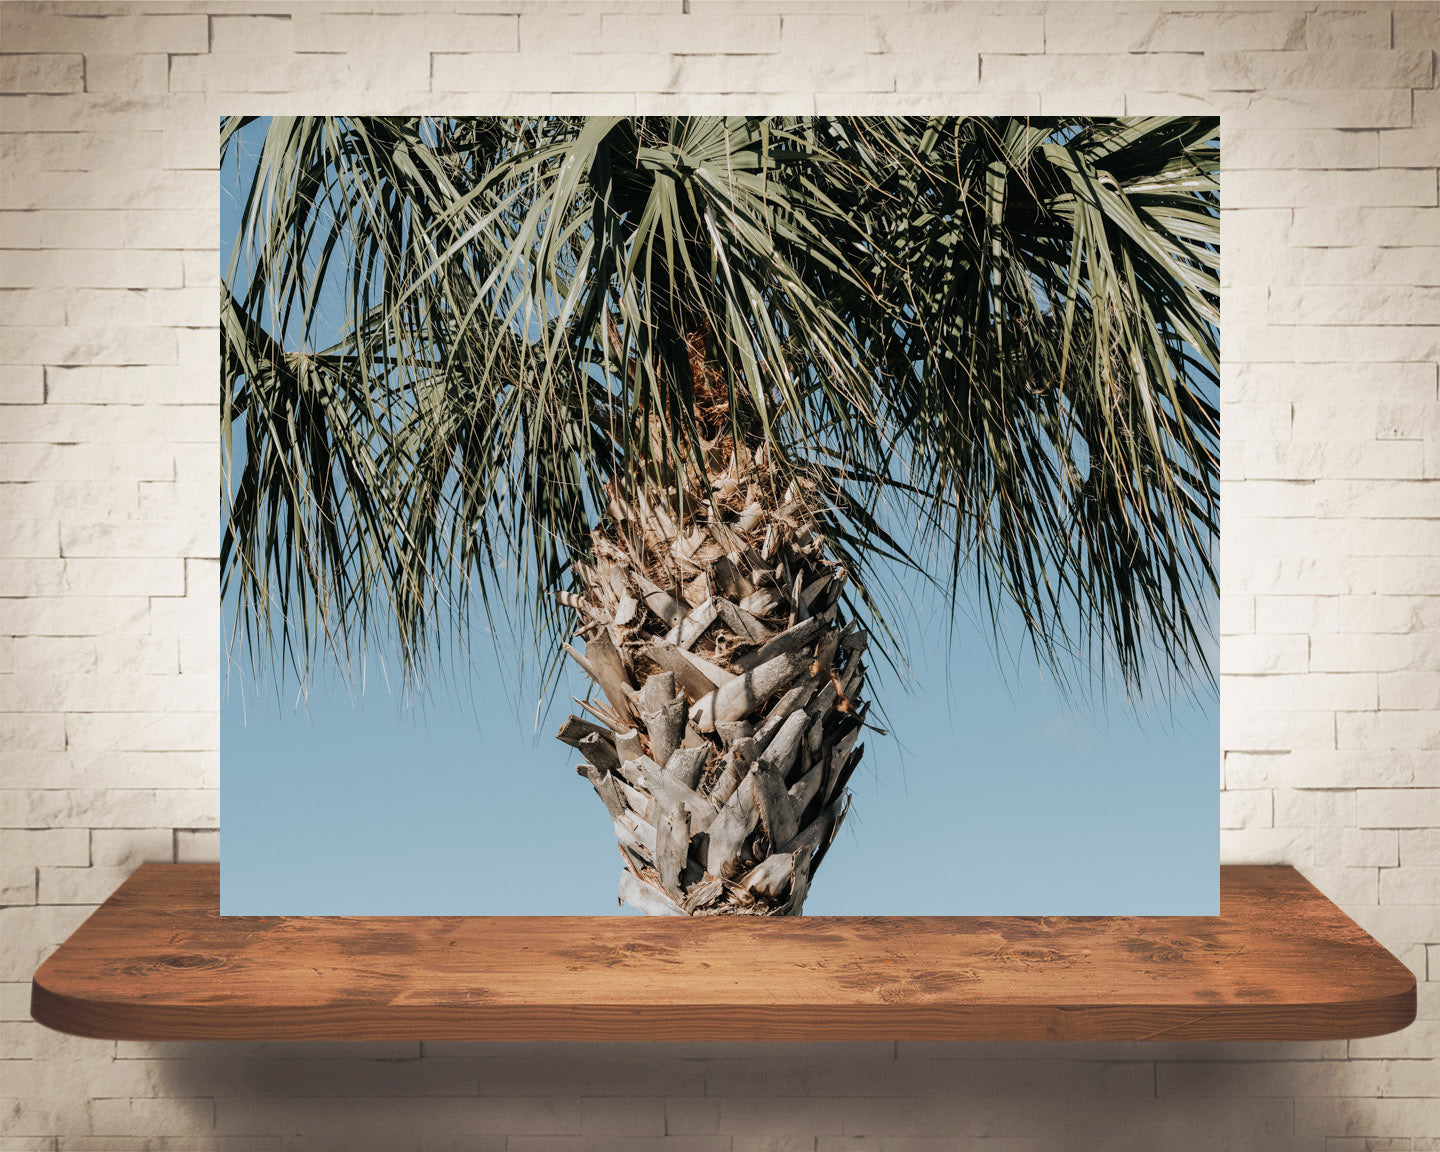 Palm Tree Photograph